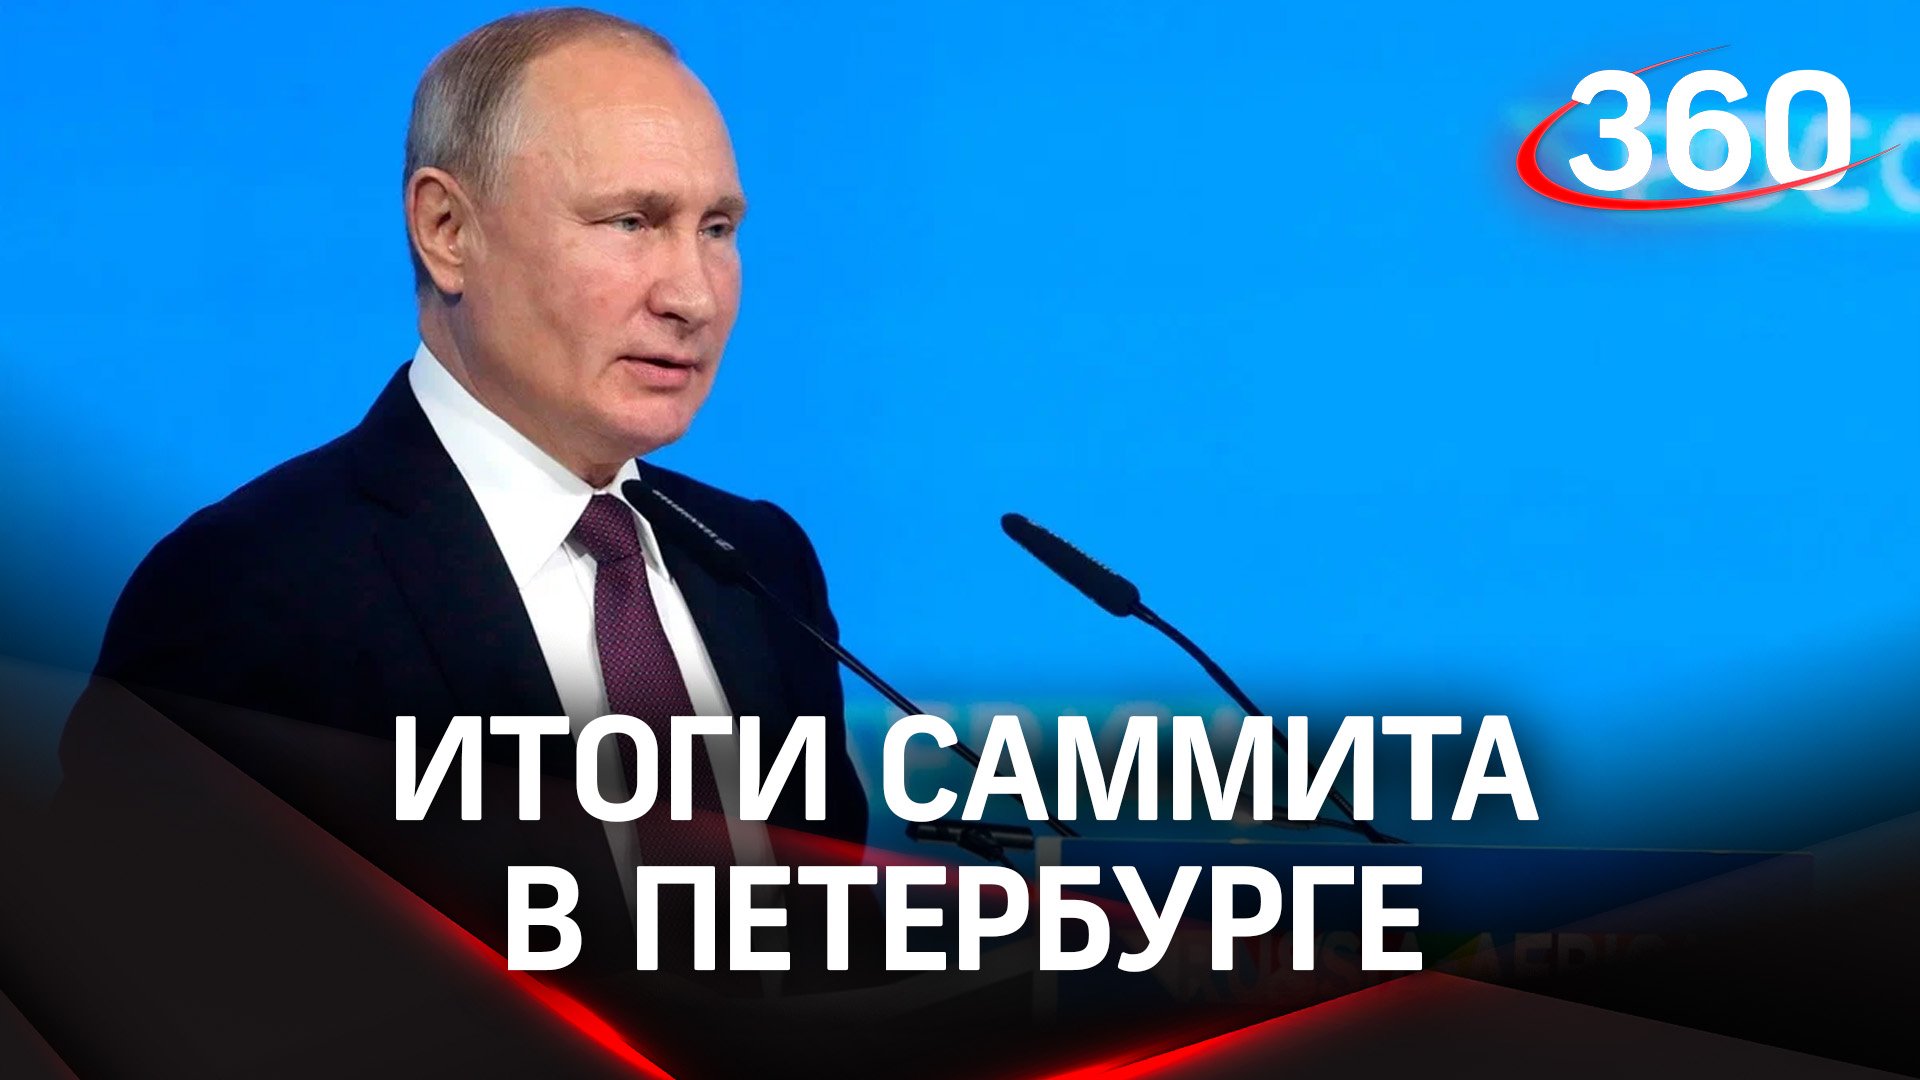 Путин обсудил с лидерами стран Африки решение украинского кризиса. Итоги саммита в Петербурге